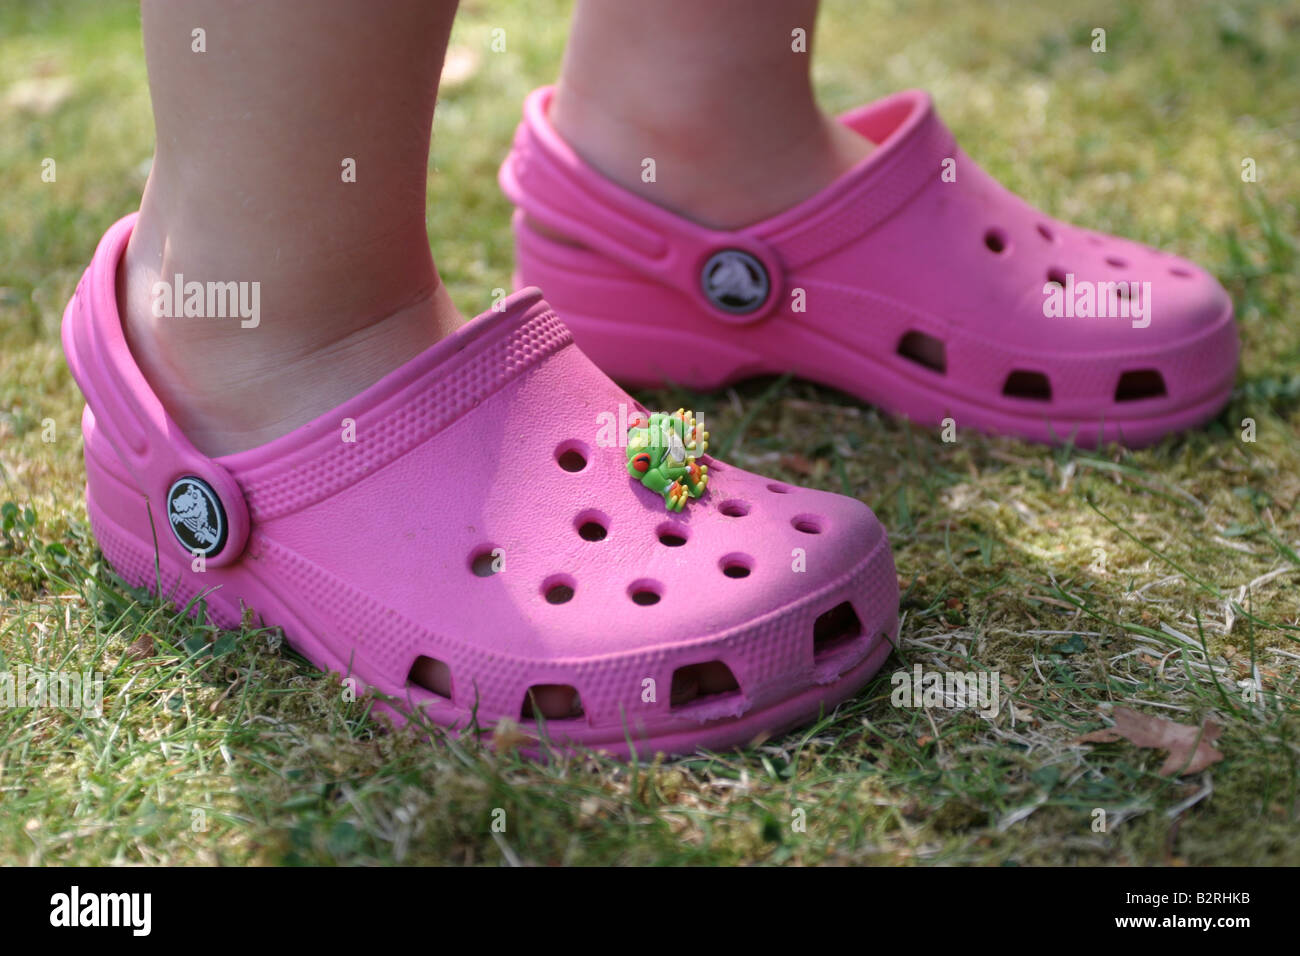 Pink Crocs shoes Stock Photo - Alamy